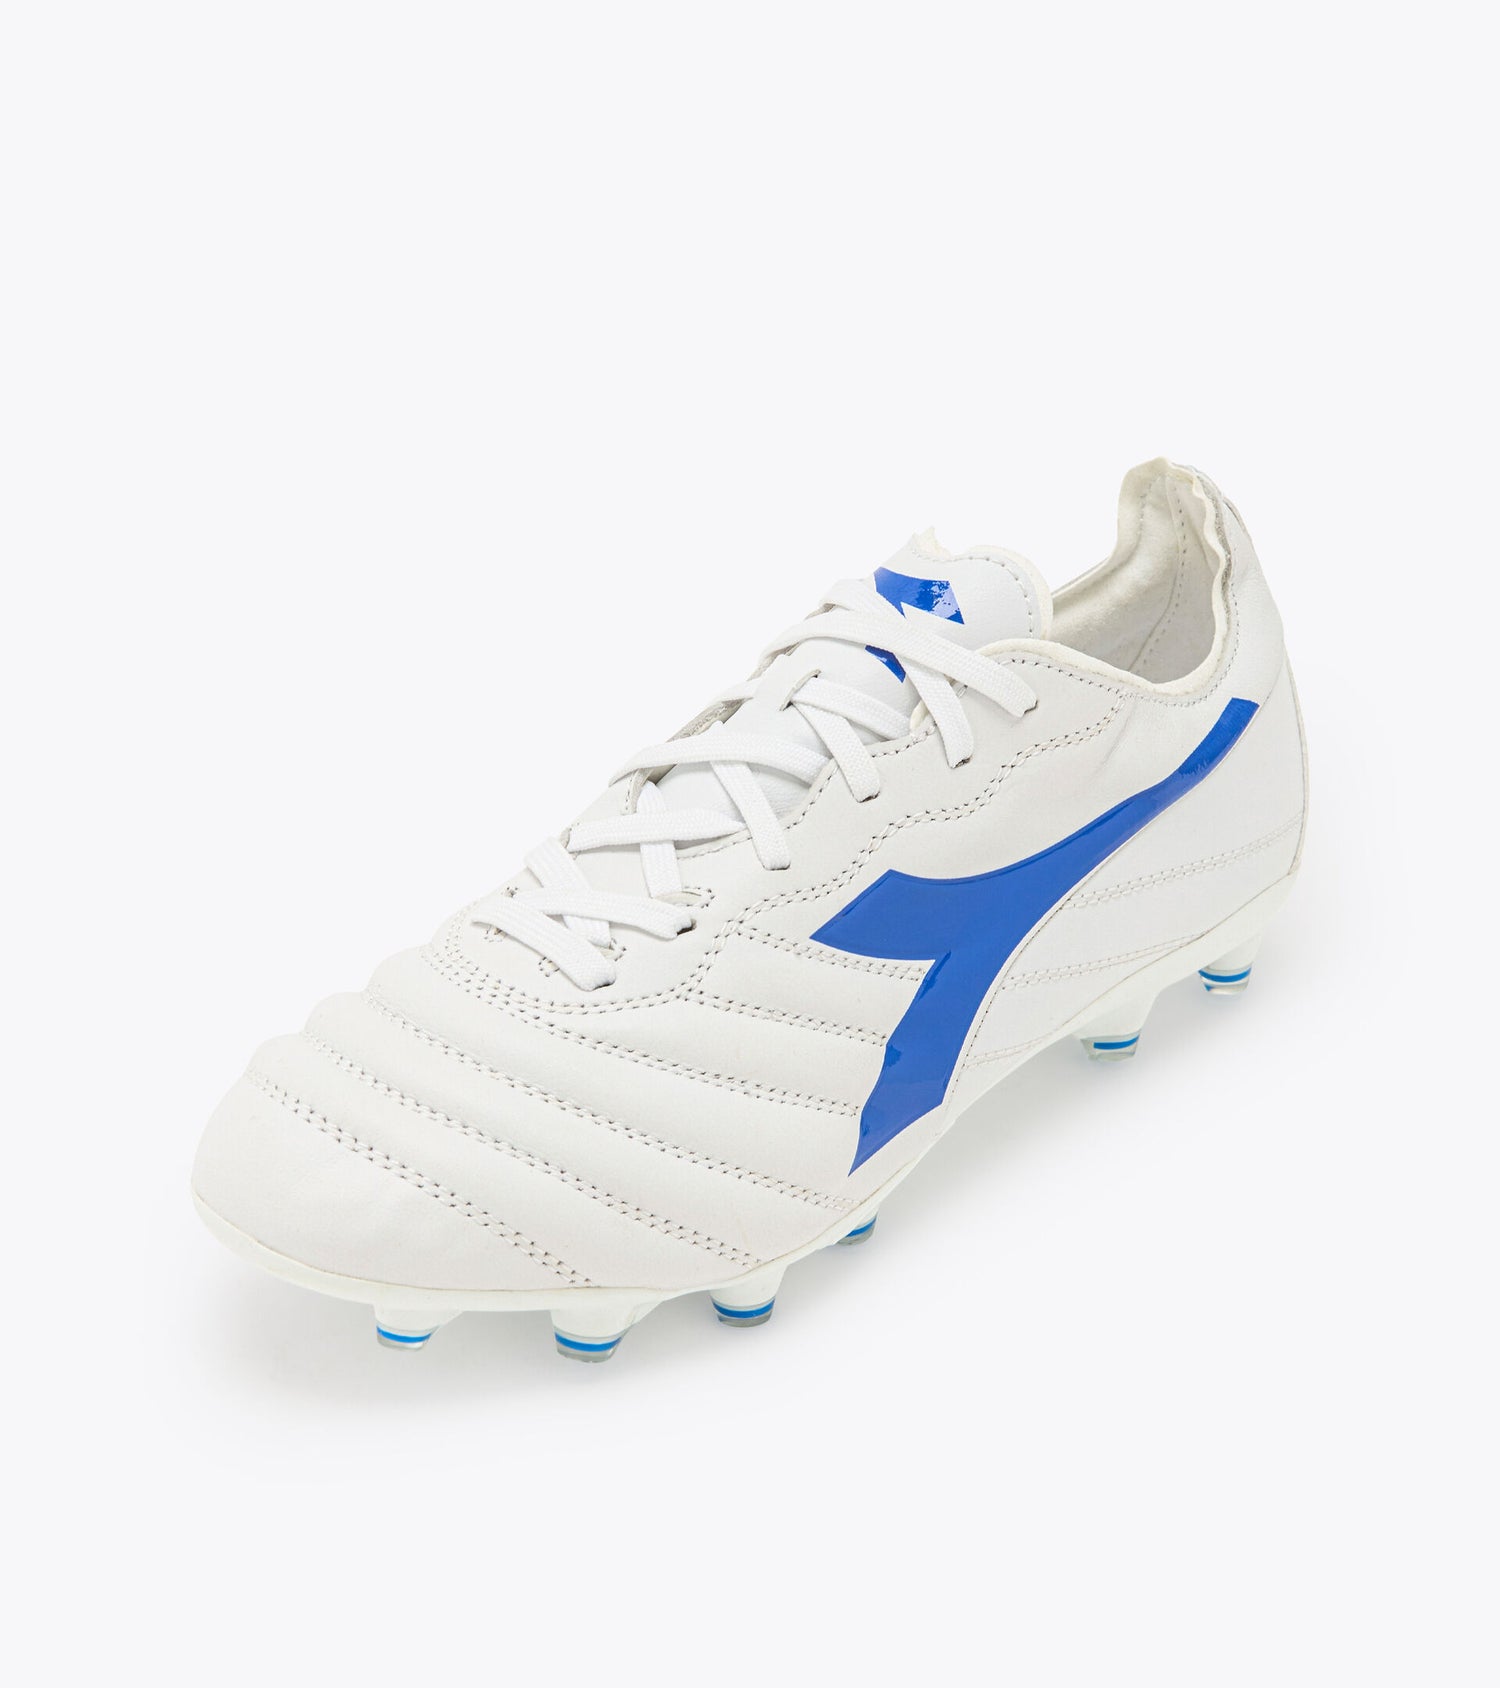 Diadora Brasil Elite 2 LT LP 12 Soccer Boots - White/Royal Blue